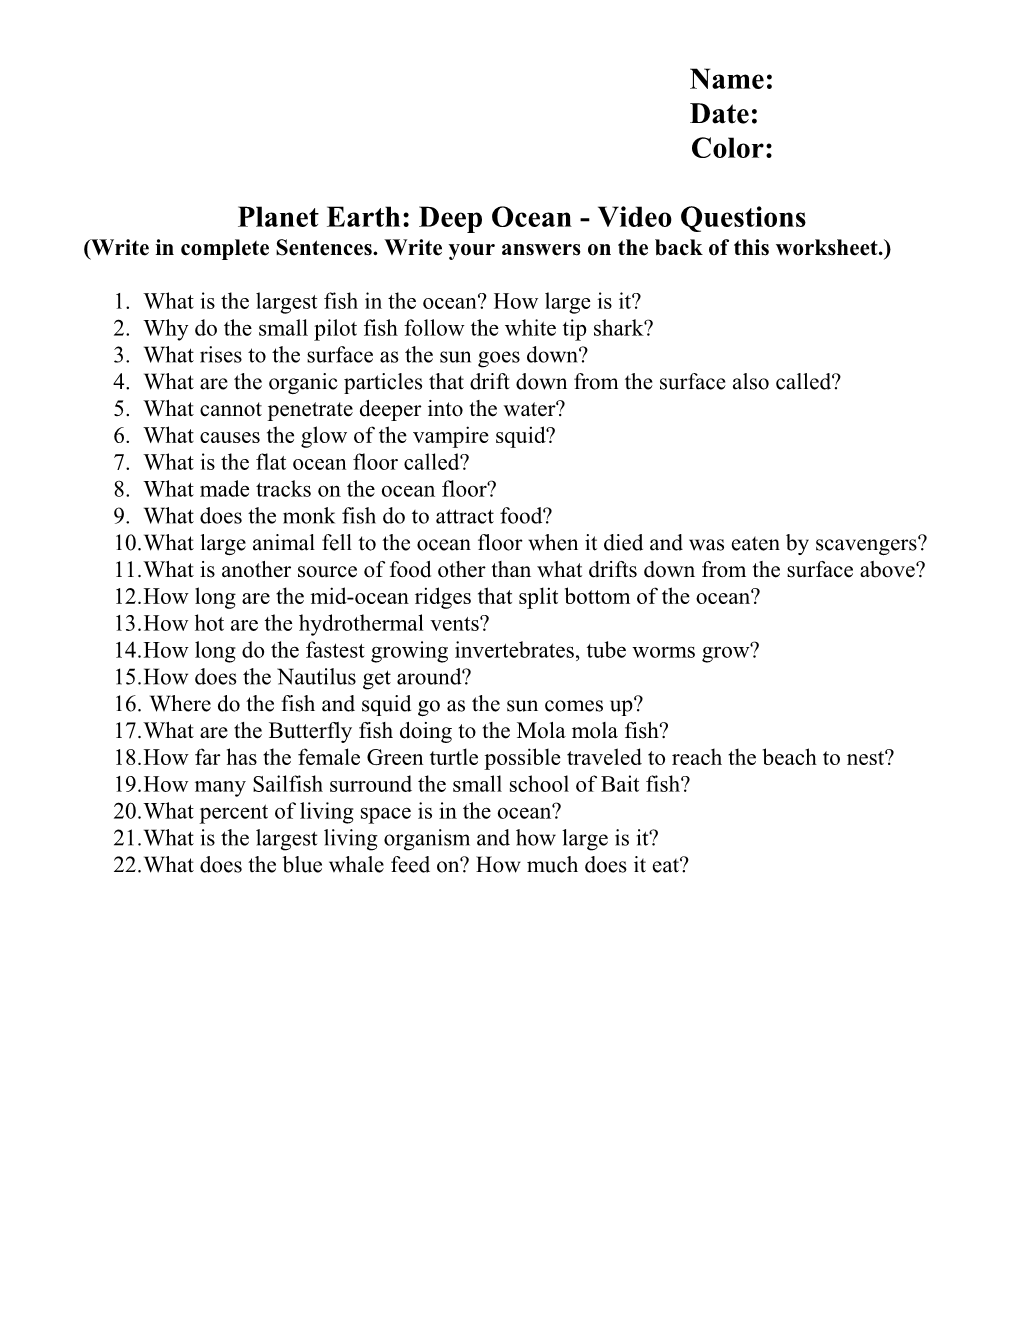 Planet Earth: Deep Ocean - Video Questions